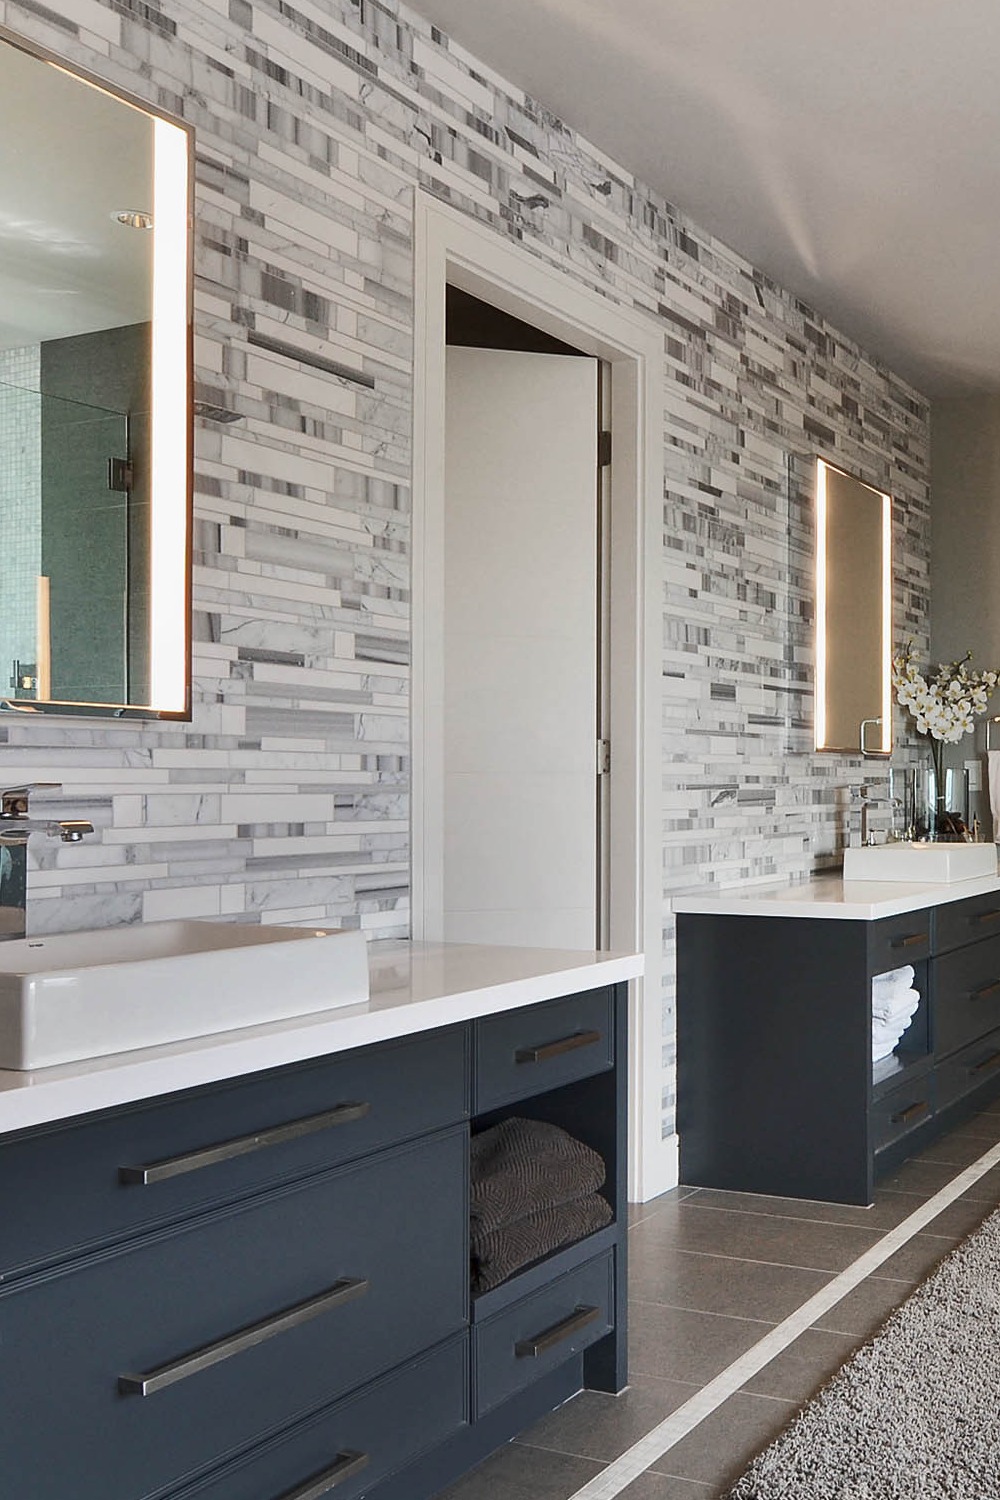 Bathroom Backsplash Room Shower Neutral Rustic Statement Visual Shade Create Traditional Matches Bold Backsplashes